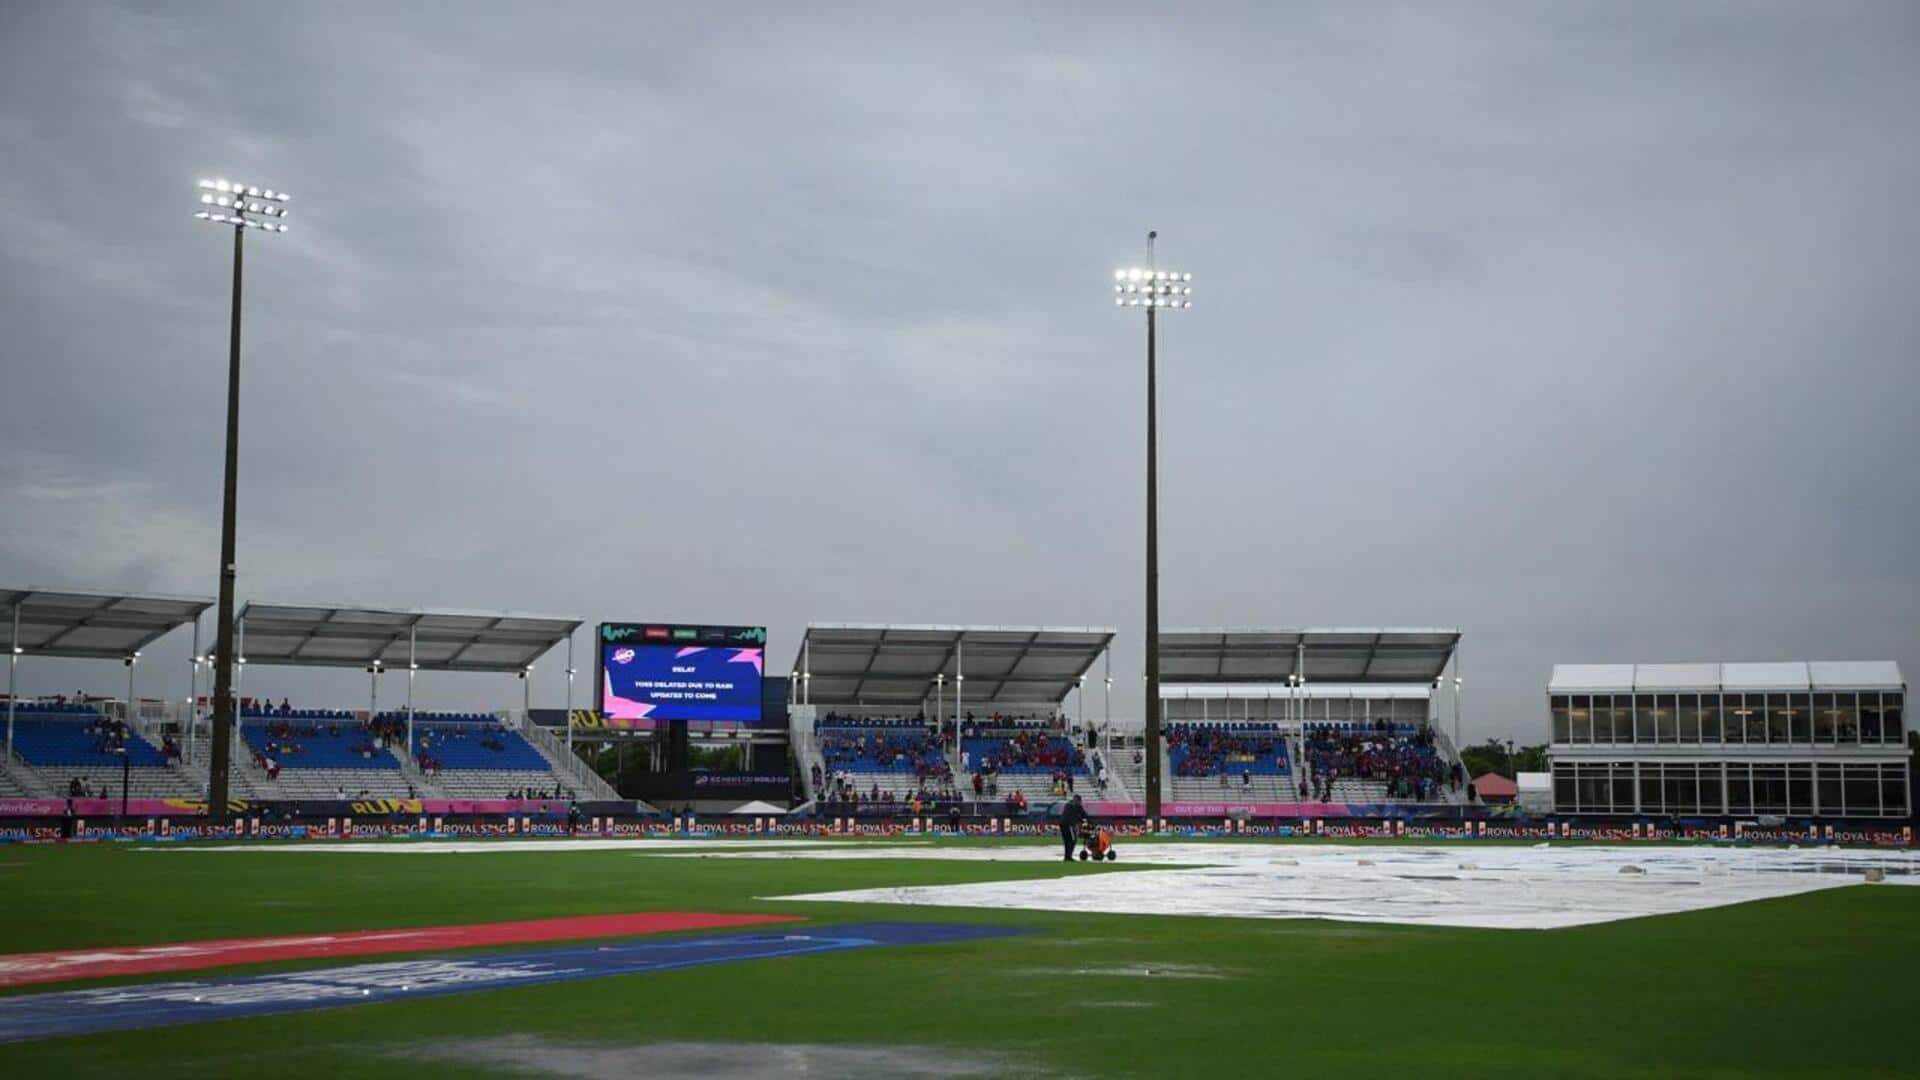 T20 WC: Sri Lanka staring at exit following Nepal washout